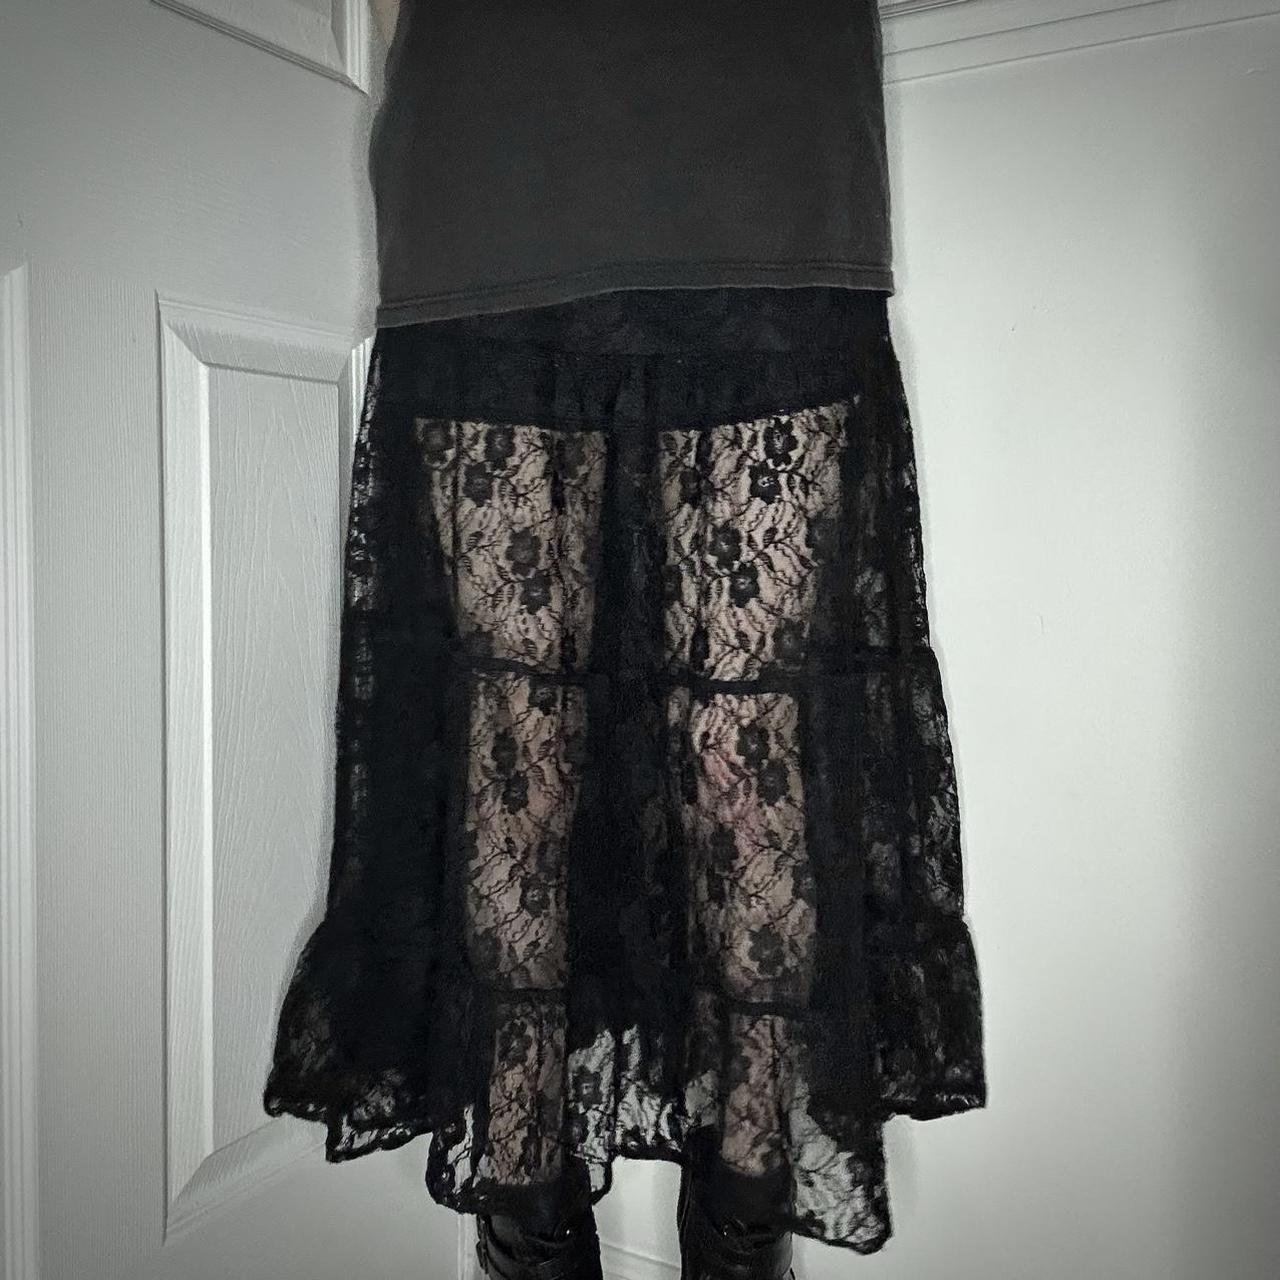 90s black lace overlay skirt ｡.:*･゜ﾟ･* gorgeous... - Depop